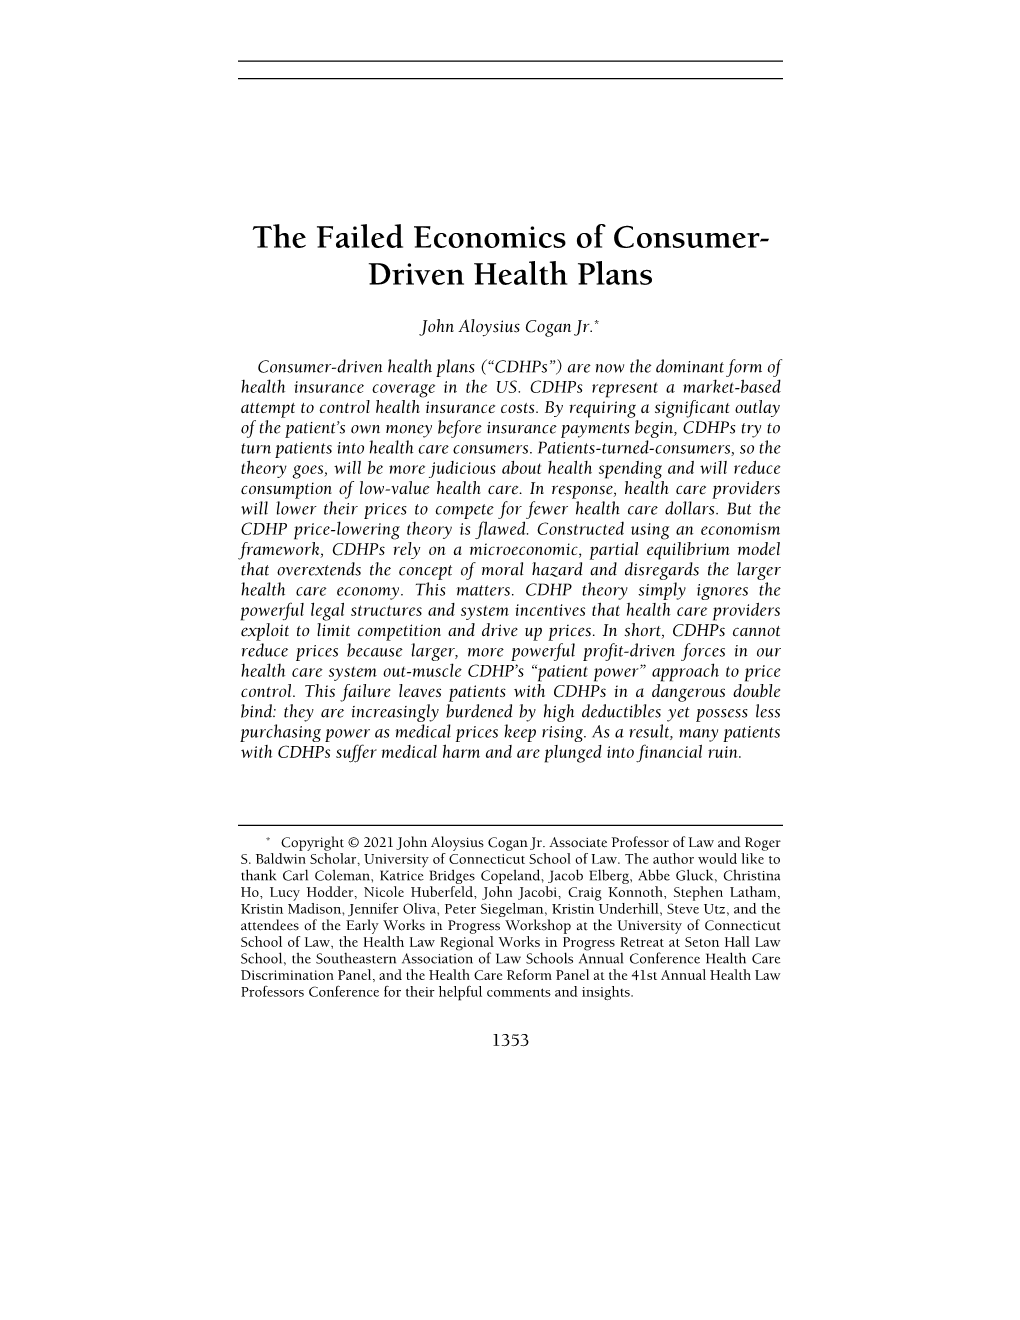 The Failed Economics of Consumer- Driven Health Plans